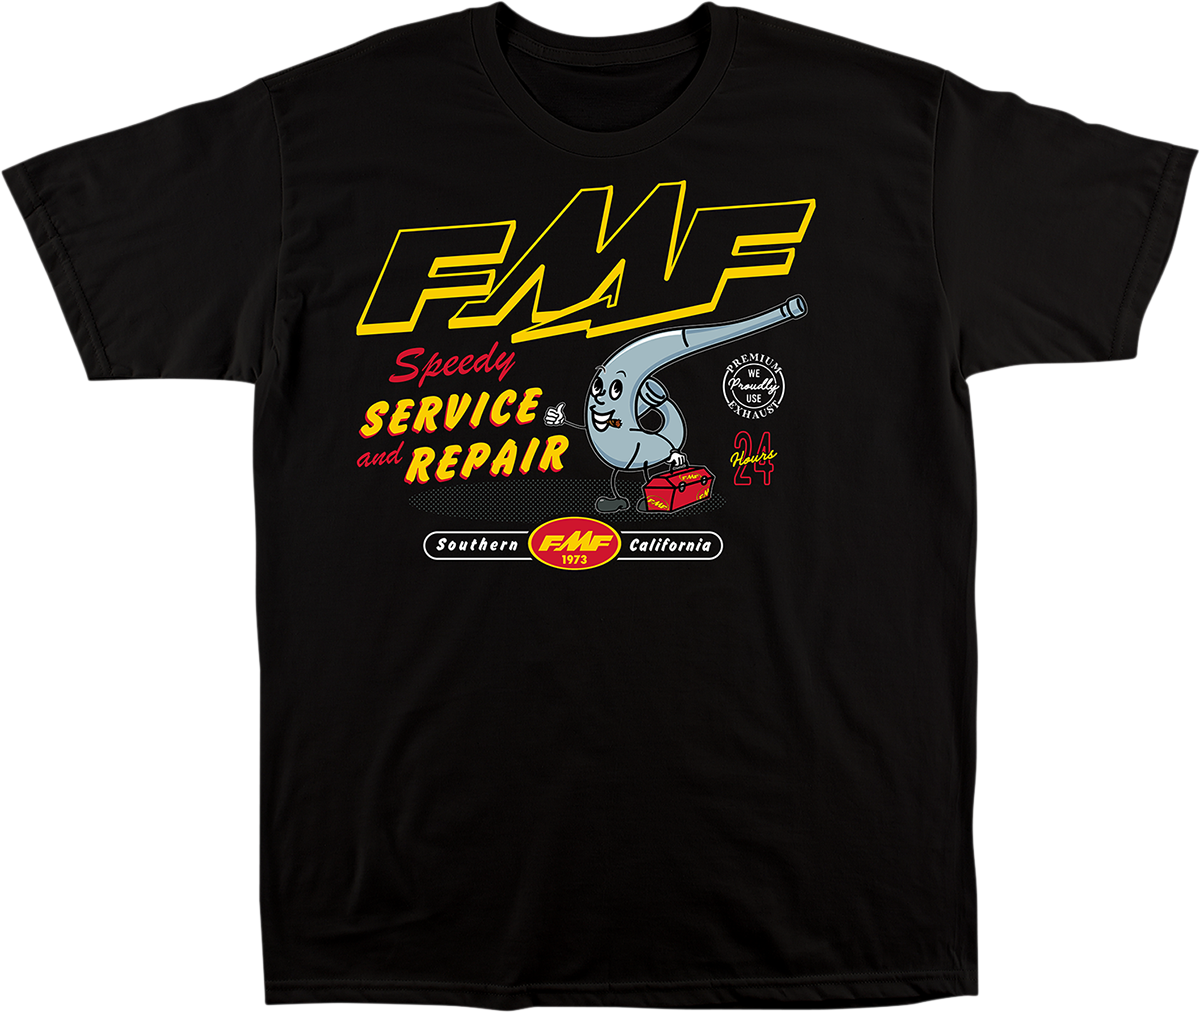 FMF Expert Service T-Shirt - Black - Medium FA21118913BKMD 3030-21308